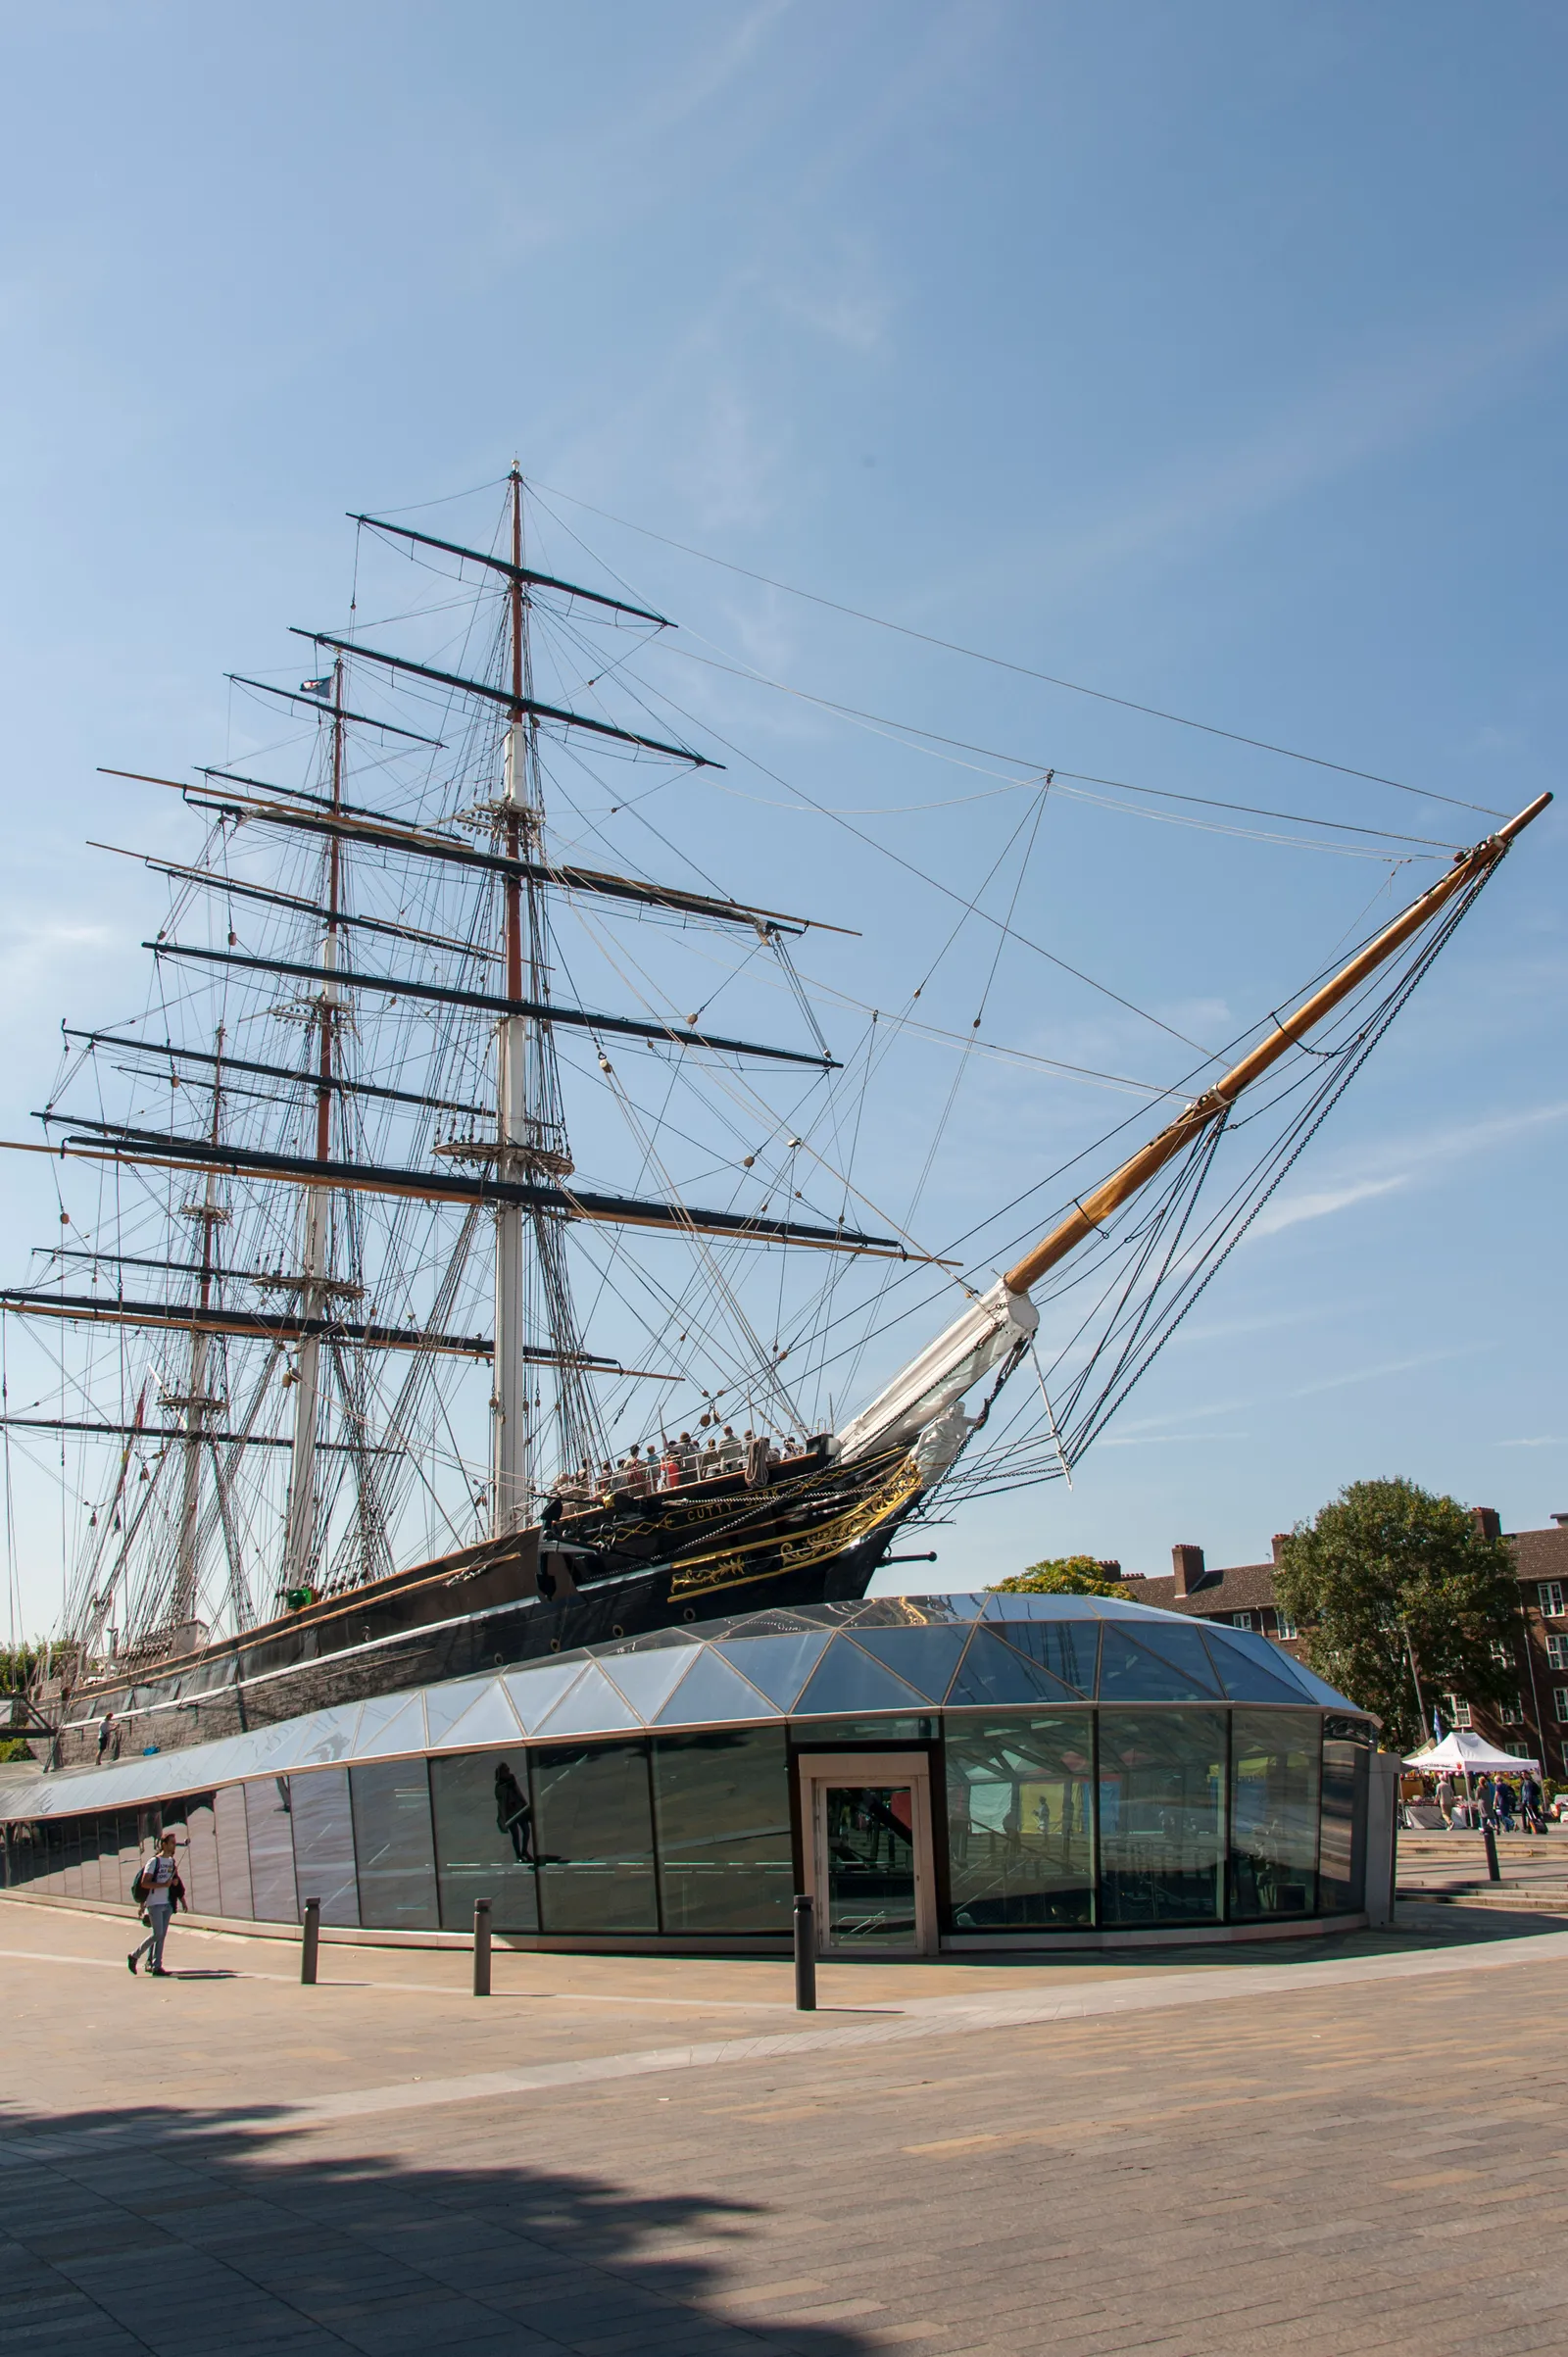 8 vNational Maritime Museum, London